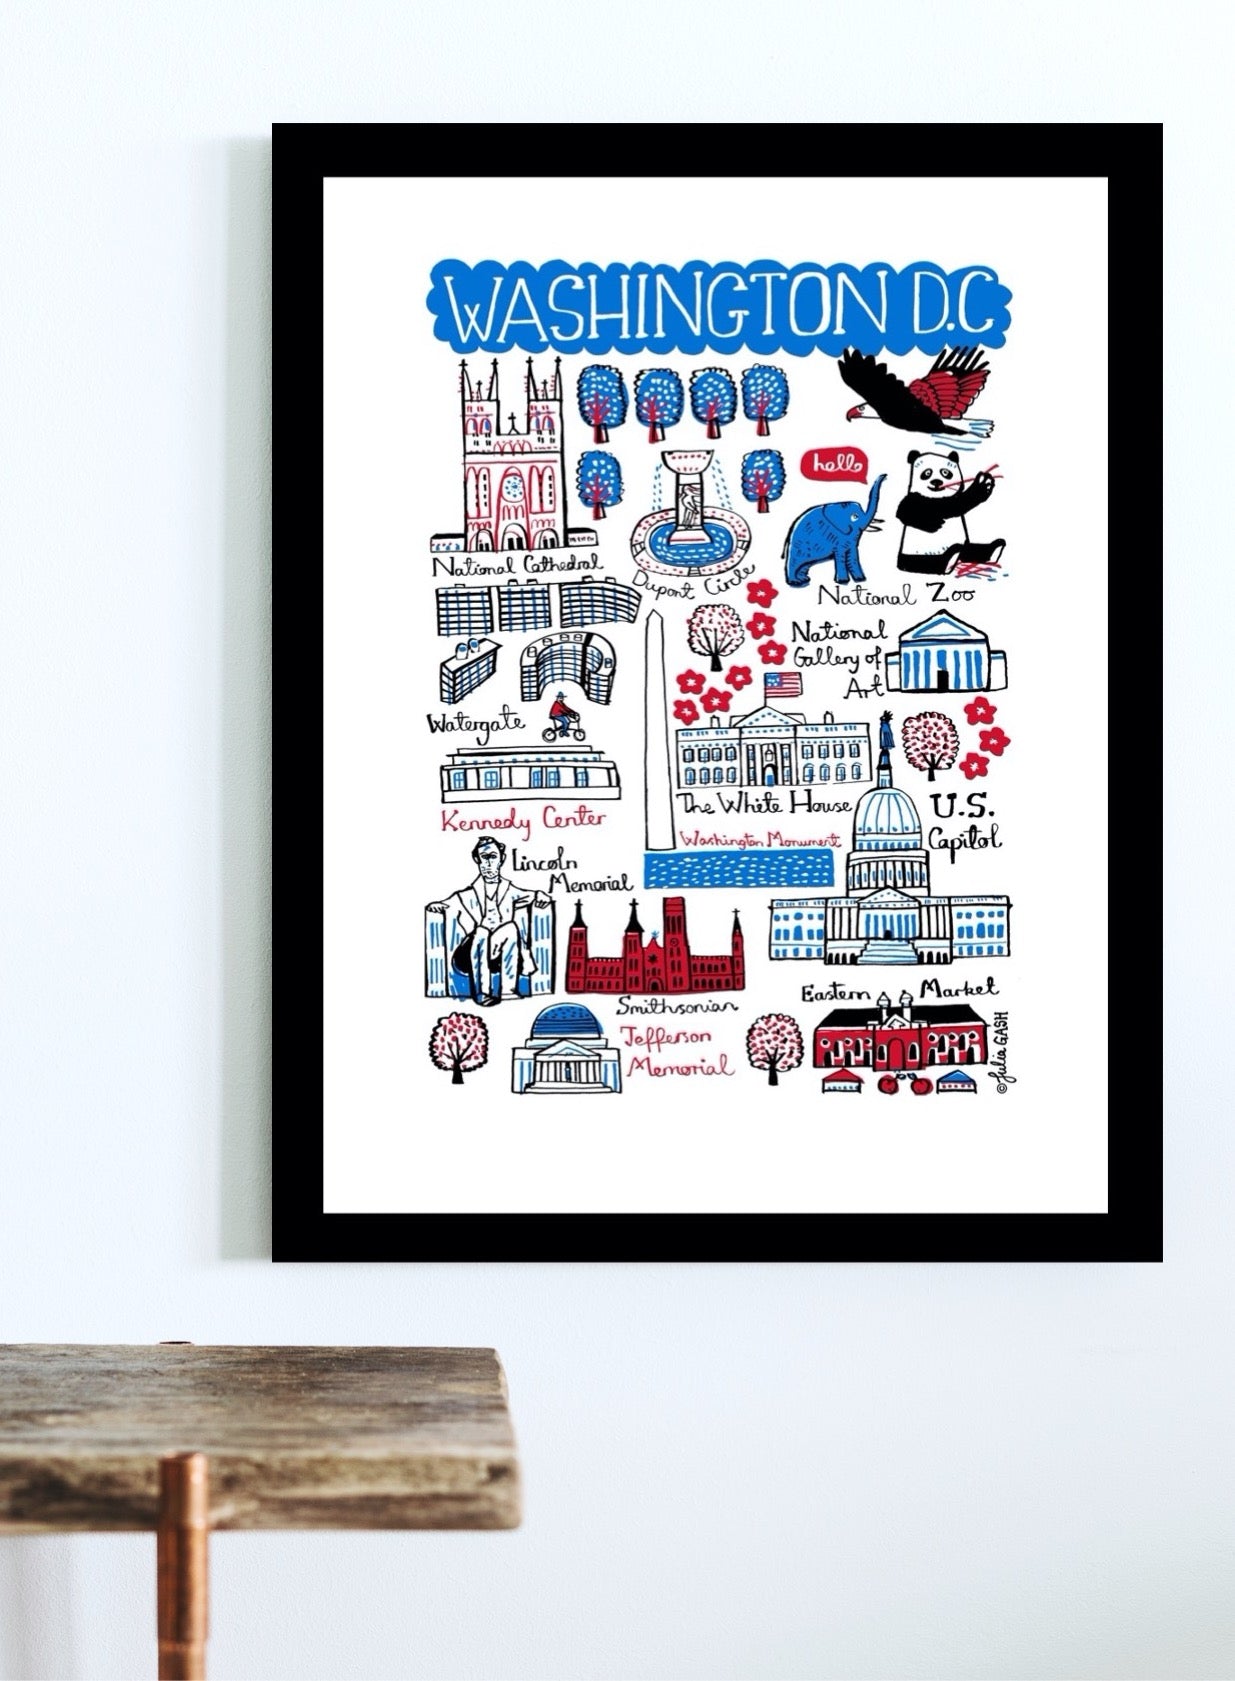 Washington DC Travel Art Print by Julia Gash featuring The White House, US Capitol, Washington Monument, Lincoln Memorial